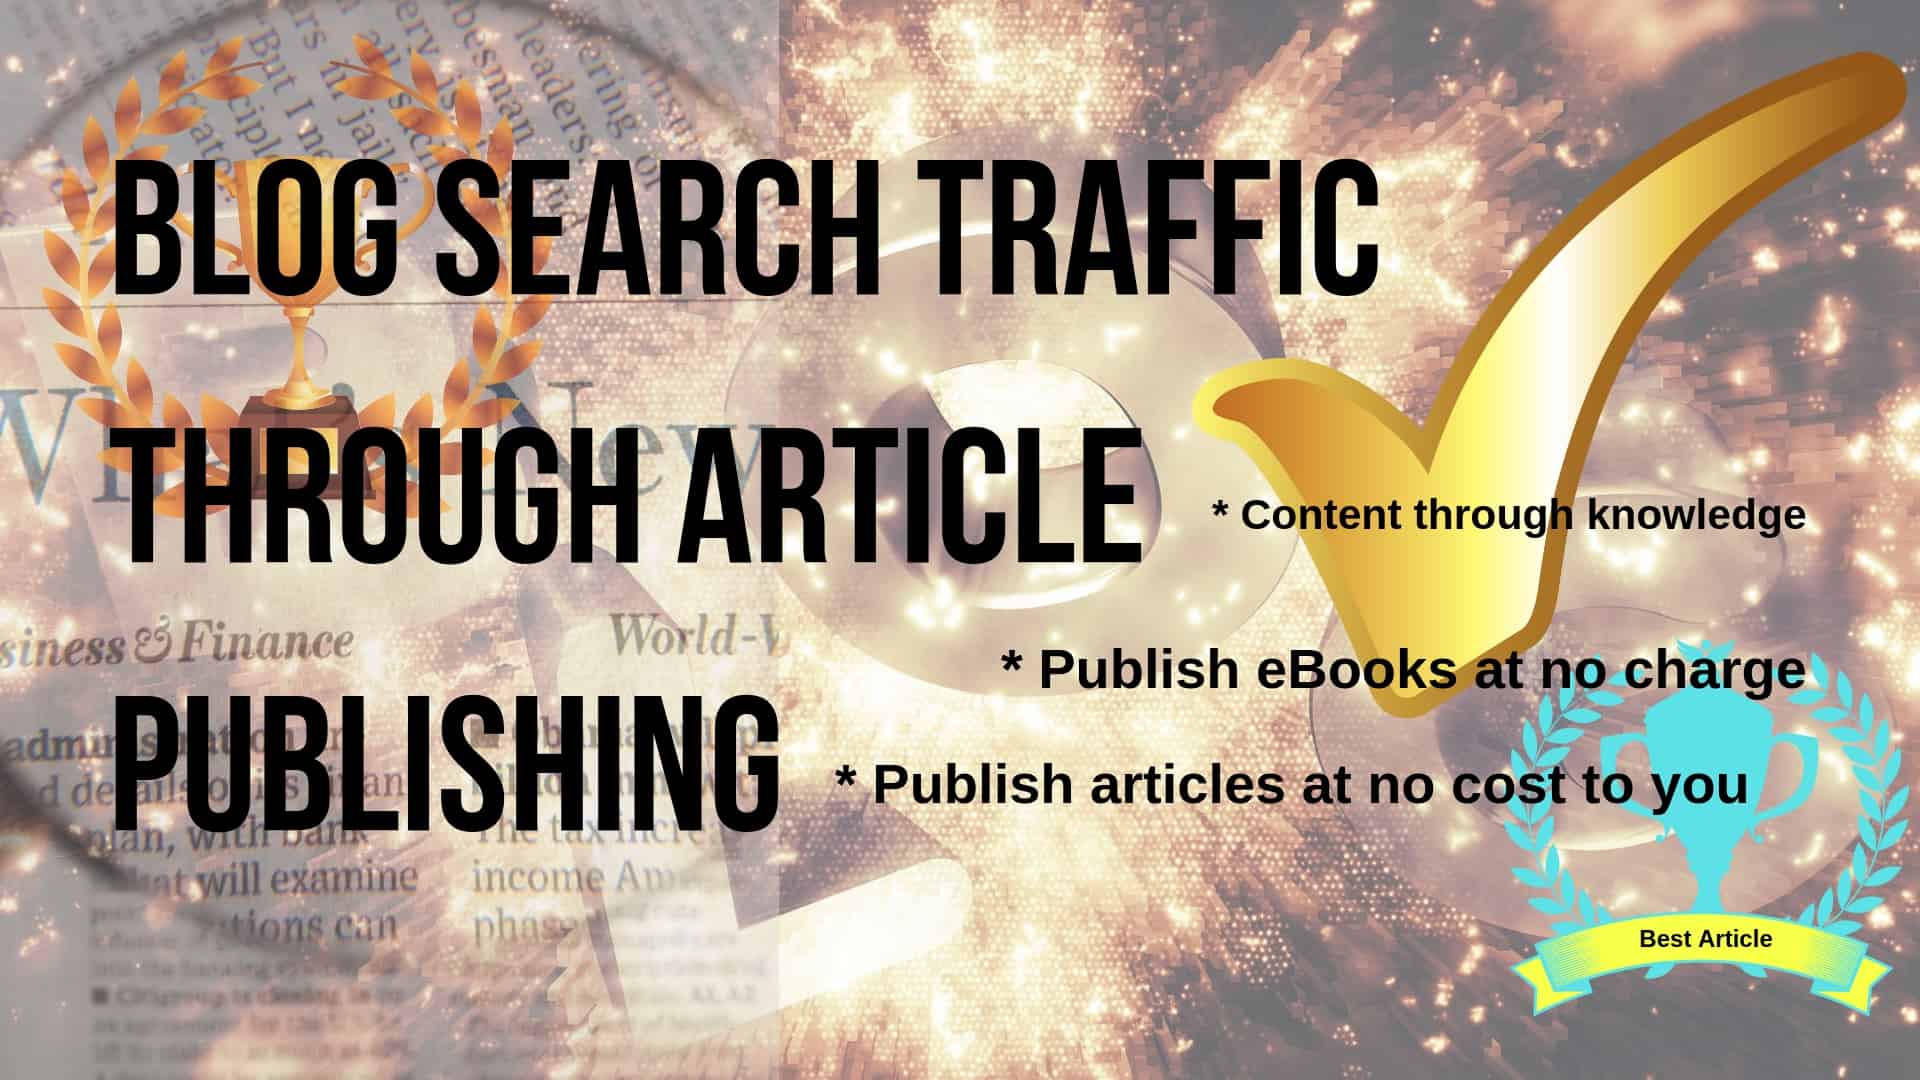 Blog search traffic through article publishing